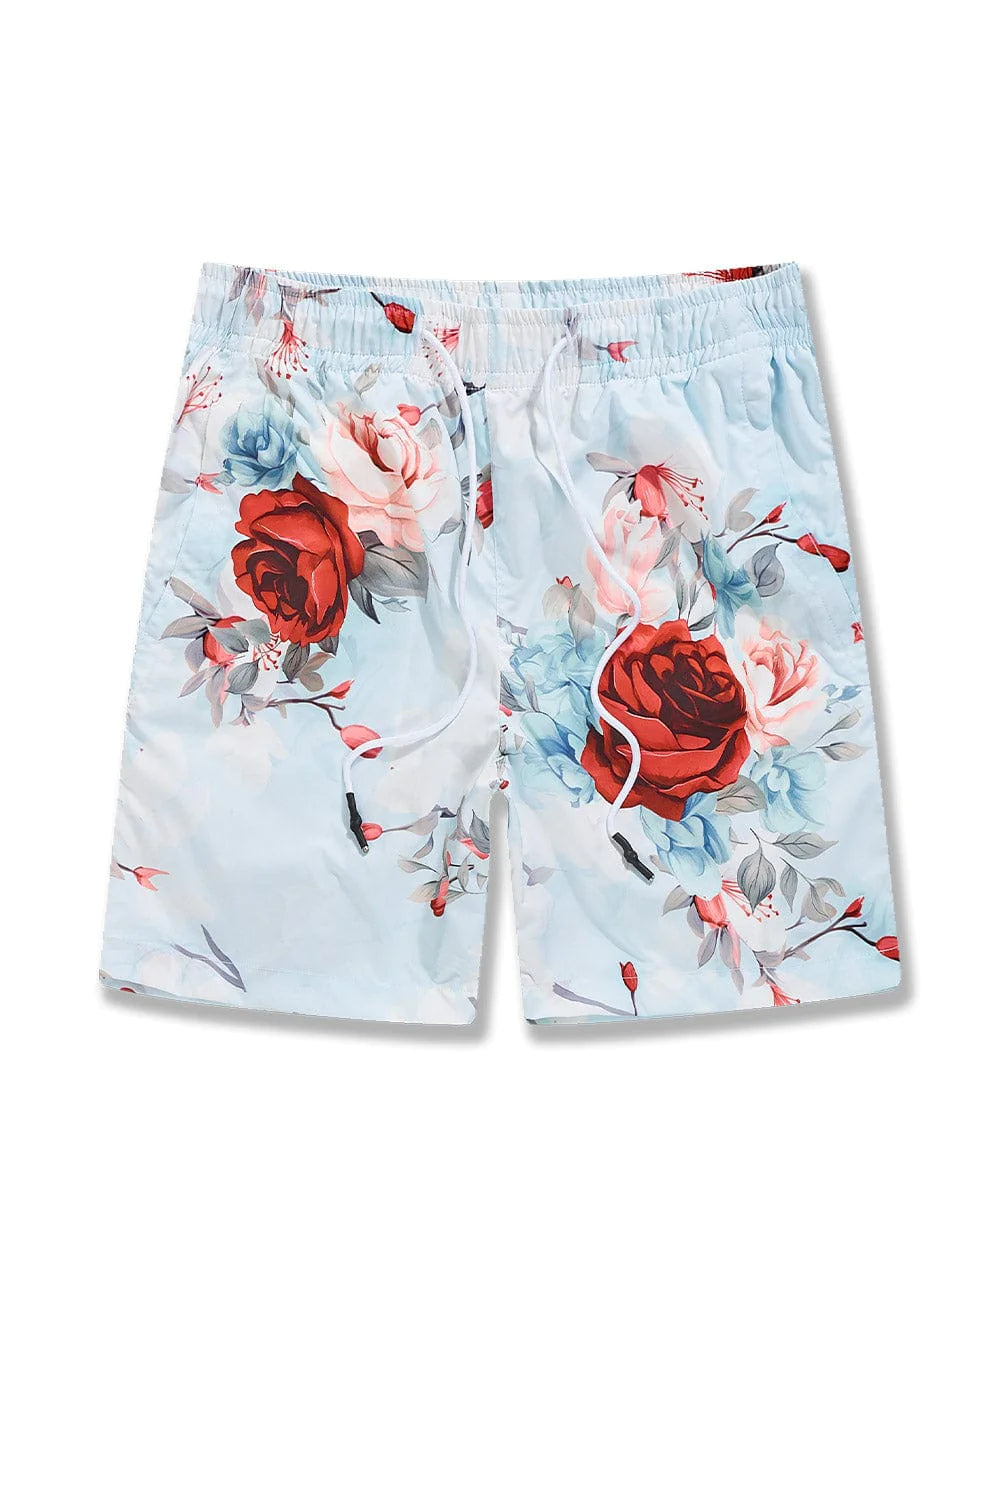 “NEW” Jordan Craig Retro Lounge Shorts (Red Floral)